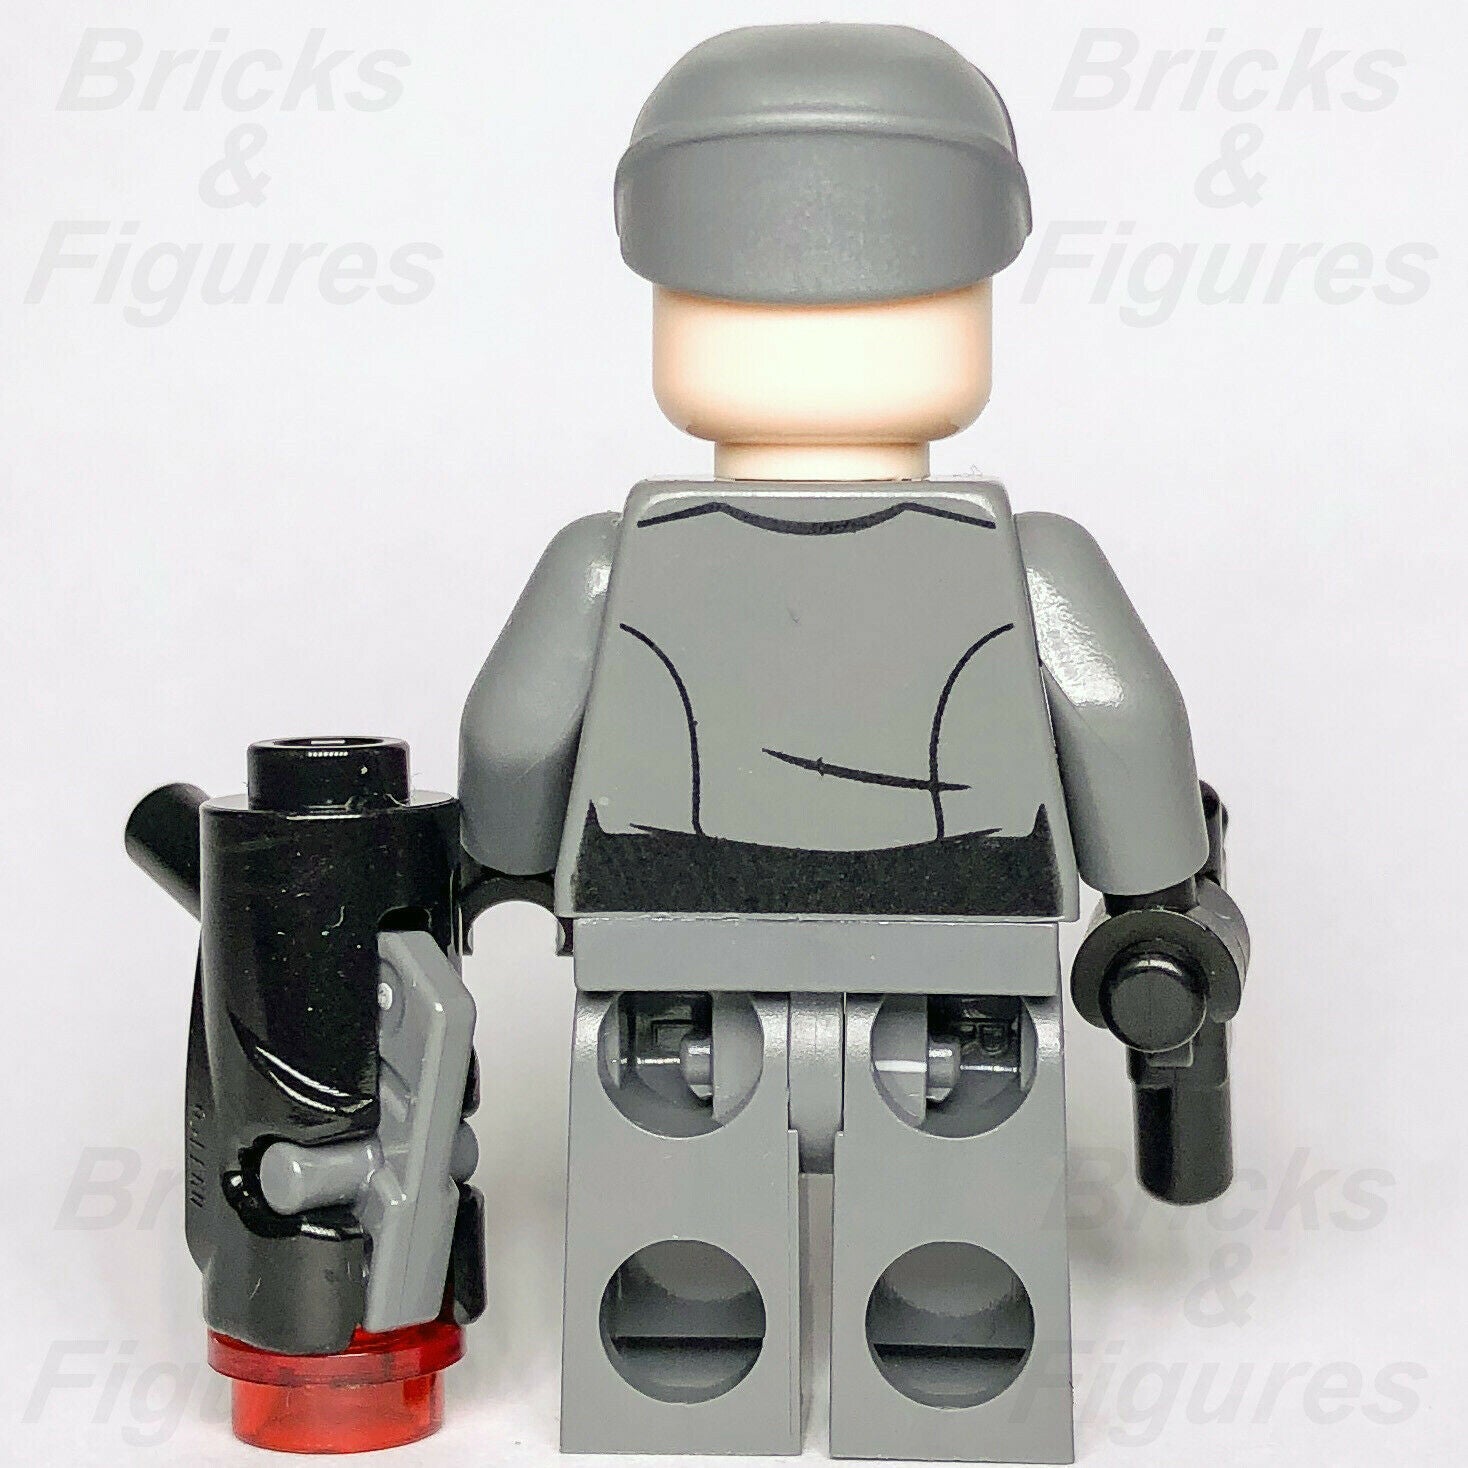 New Star Wars LEGO Imperial Recruitment Officer Solo Corellia Minifigure 75207 - Bricks & Figures